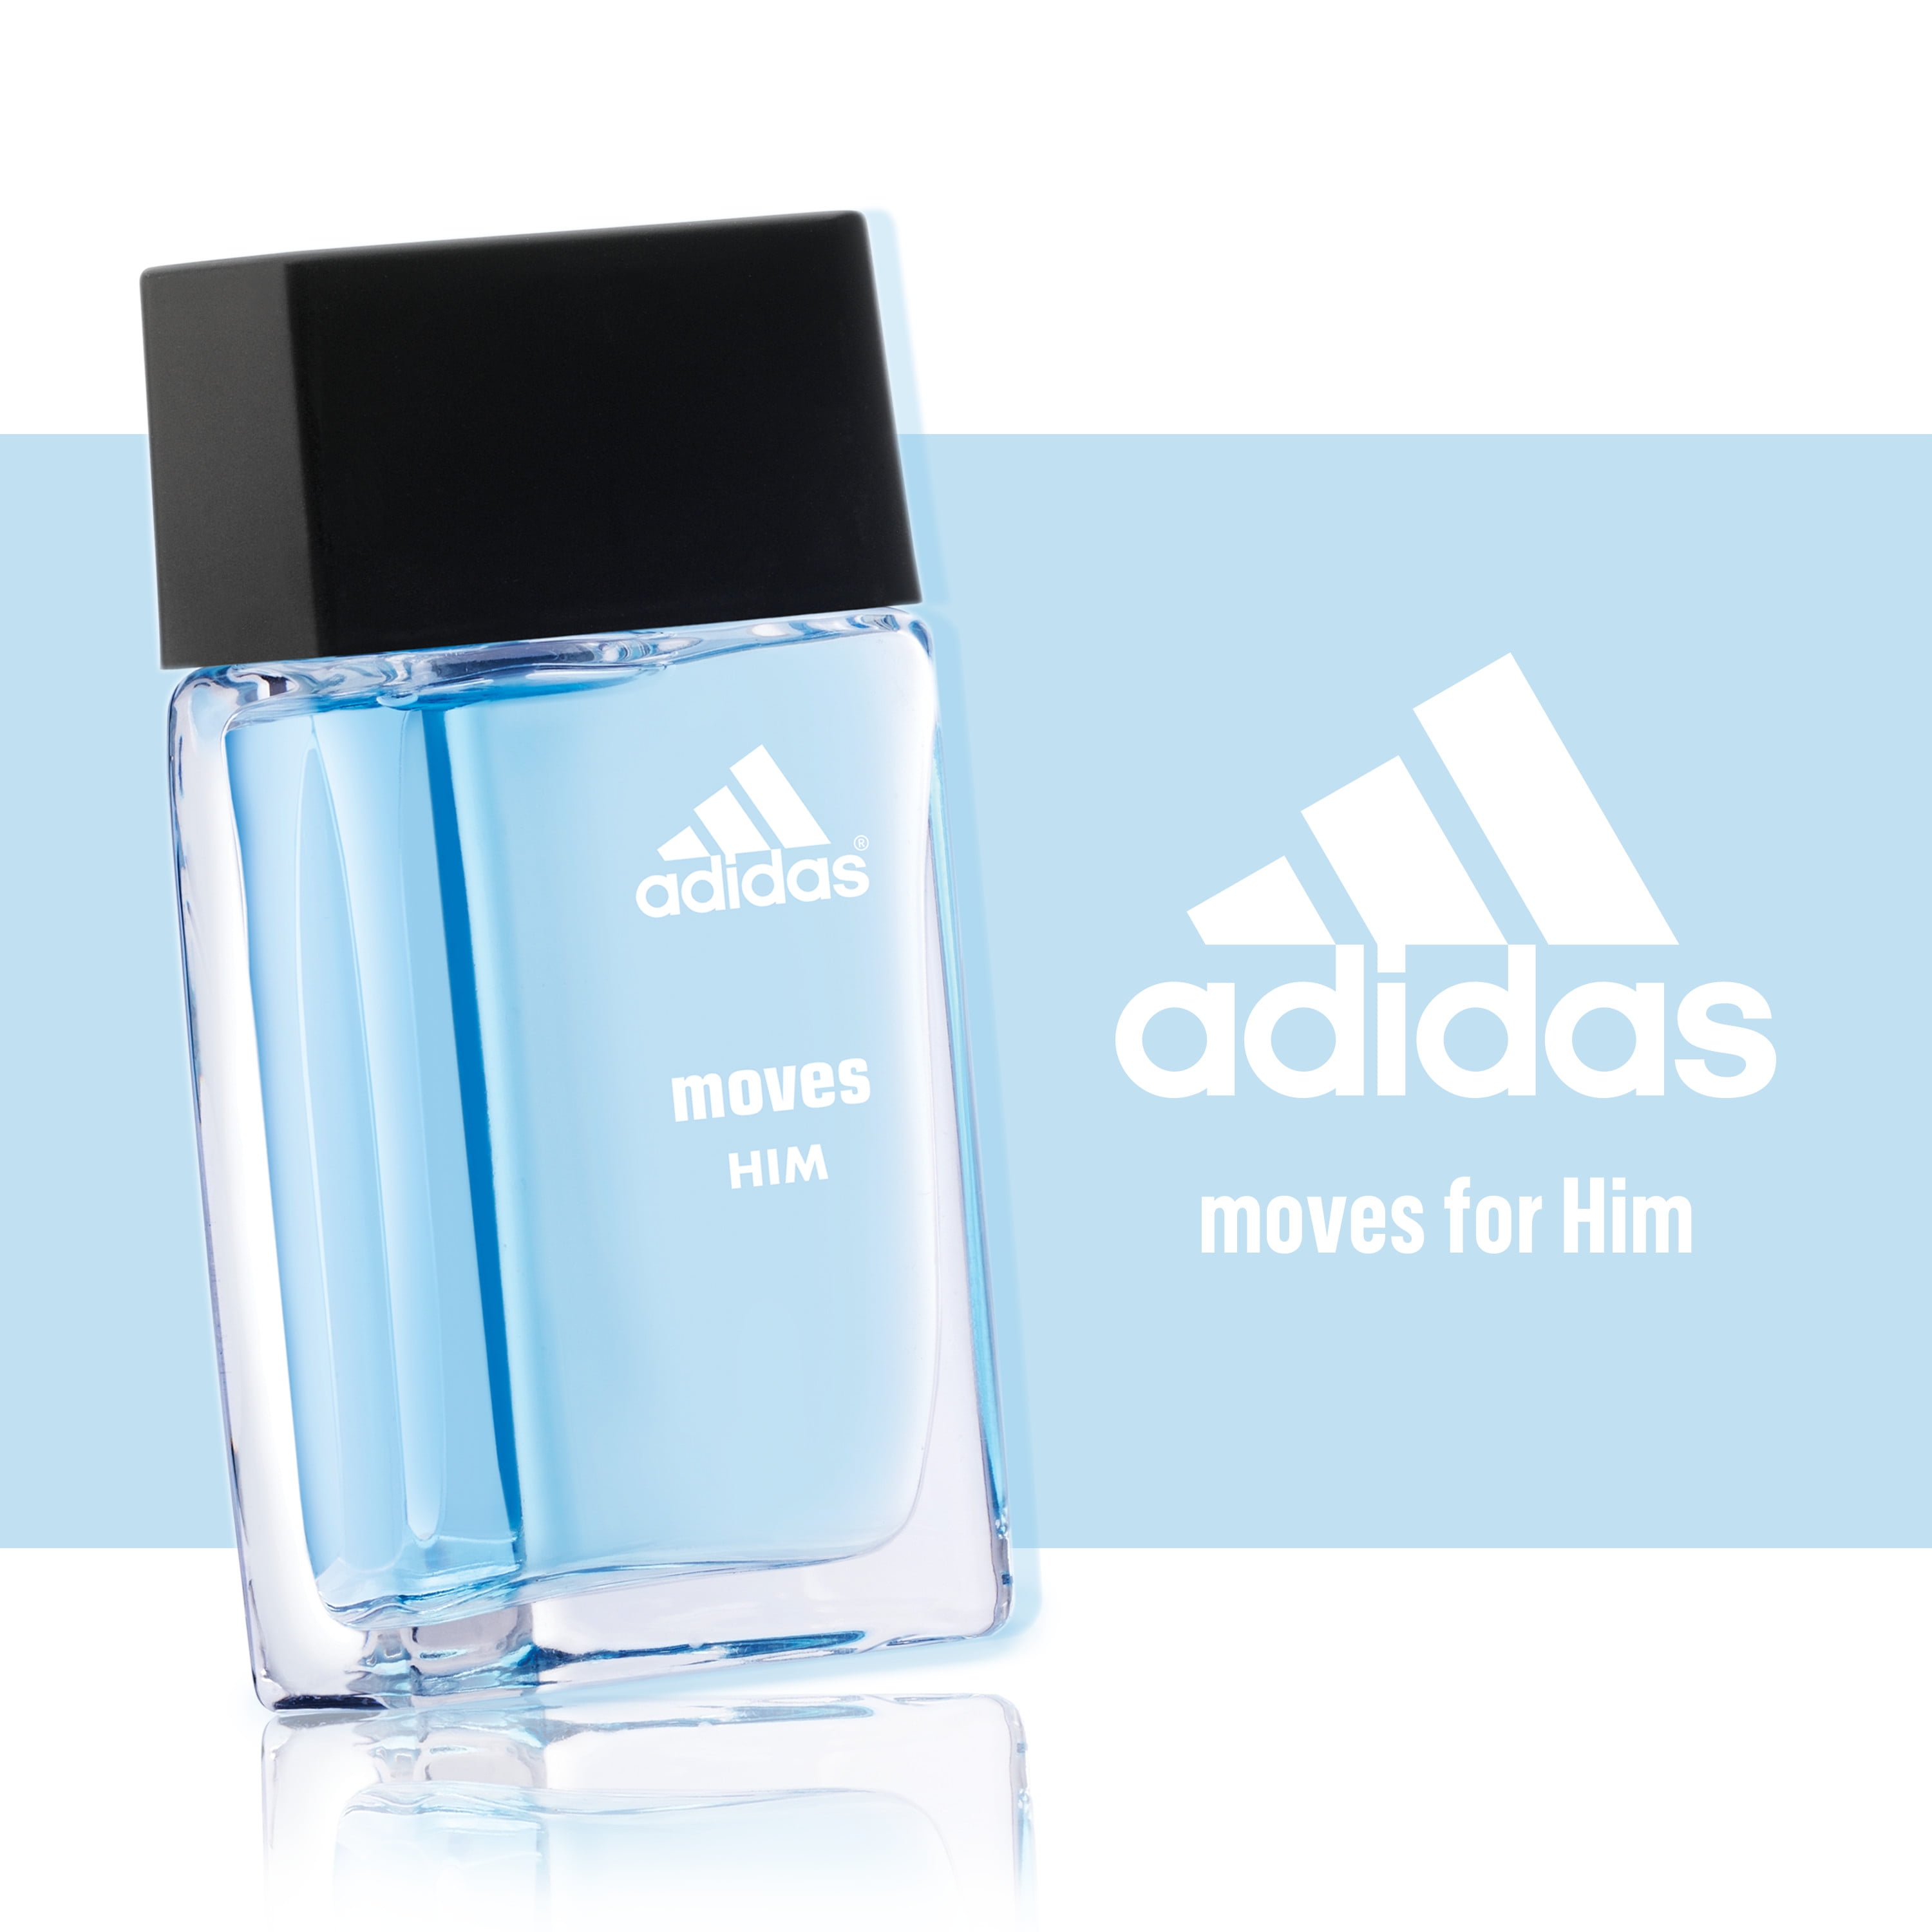 Woordenlijst vrouw Netjes Adidas Moves Eau de Toilette, 1.7 fl oz, Men's Fragrance - Walmart.com